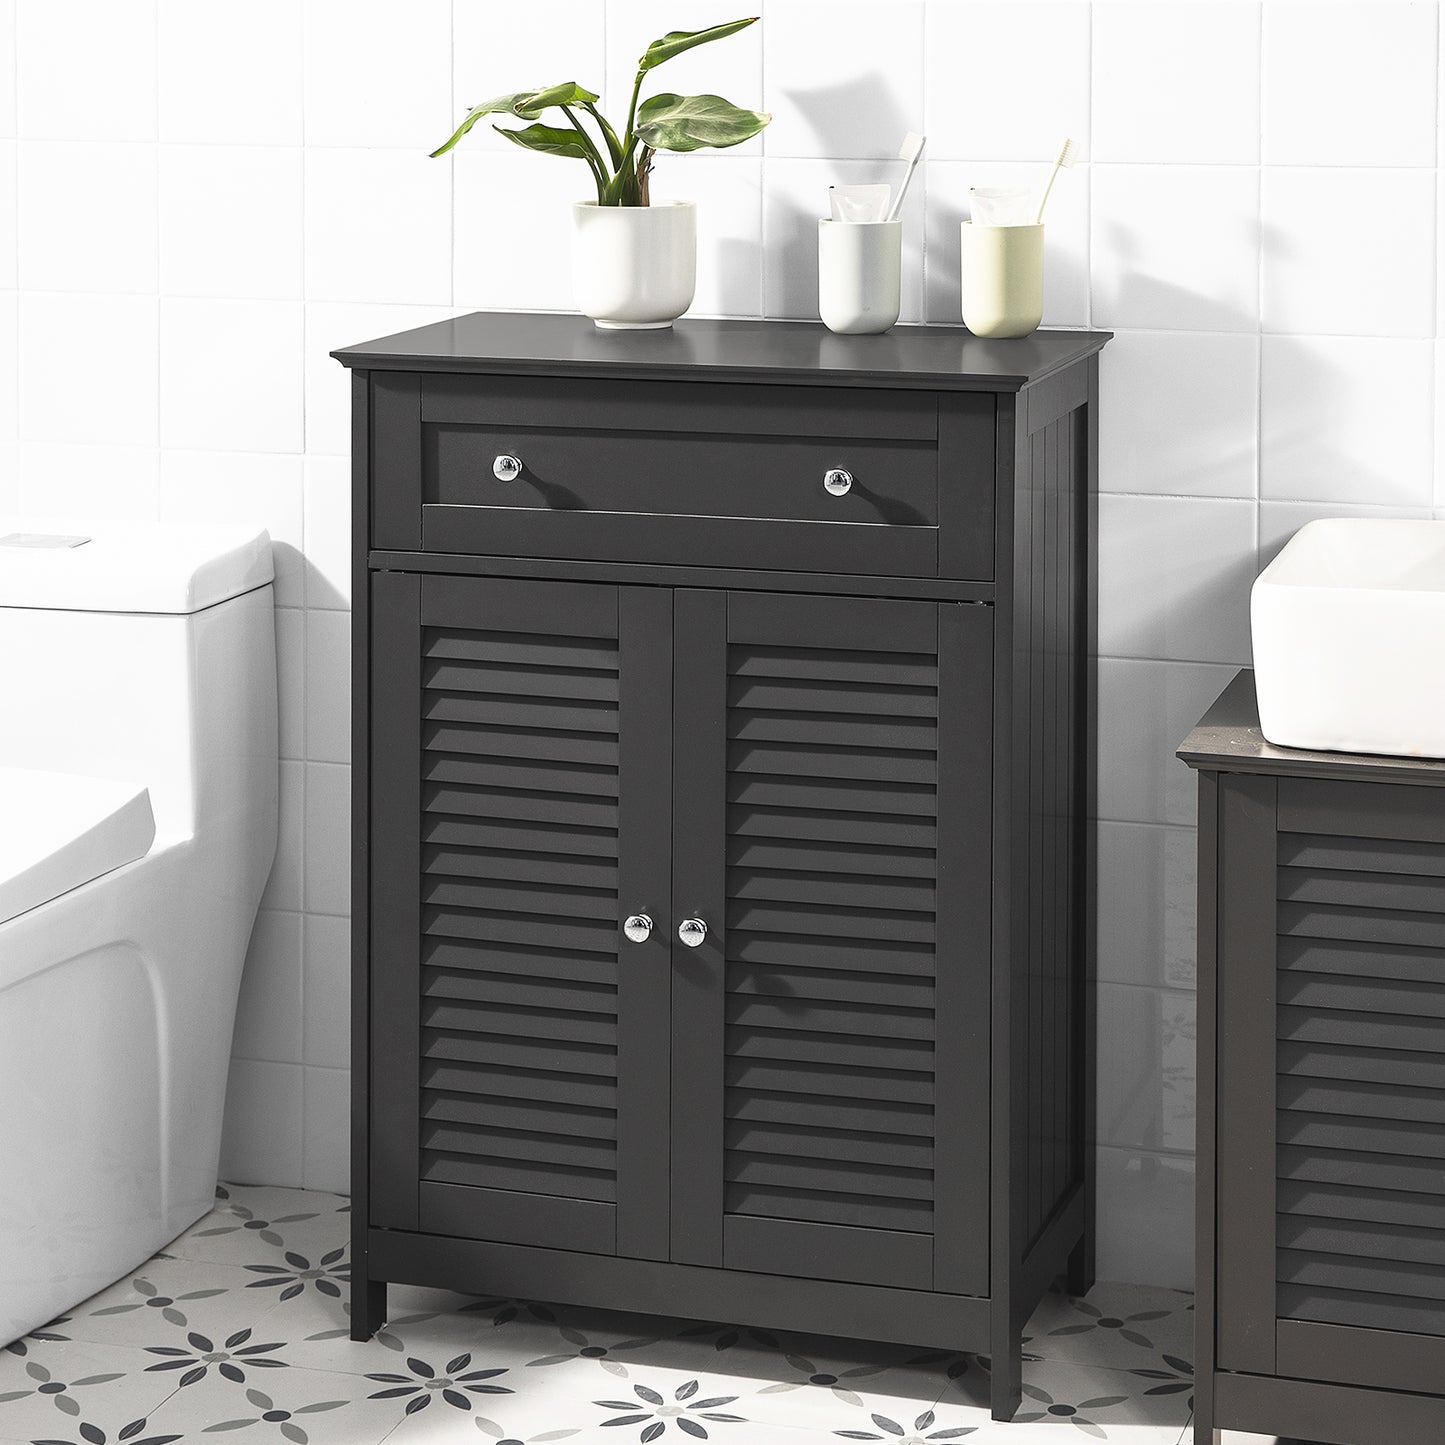 SoBuy FRG238-DG Freestanding Storage Cabinet with Drawer, 60x87x35 cm